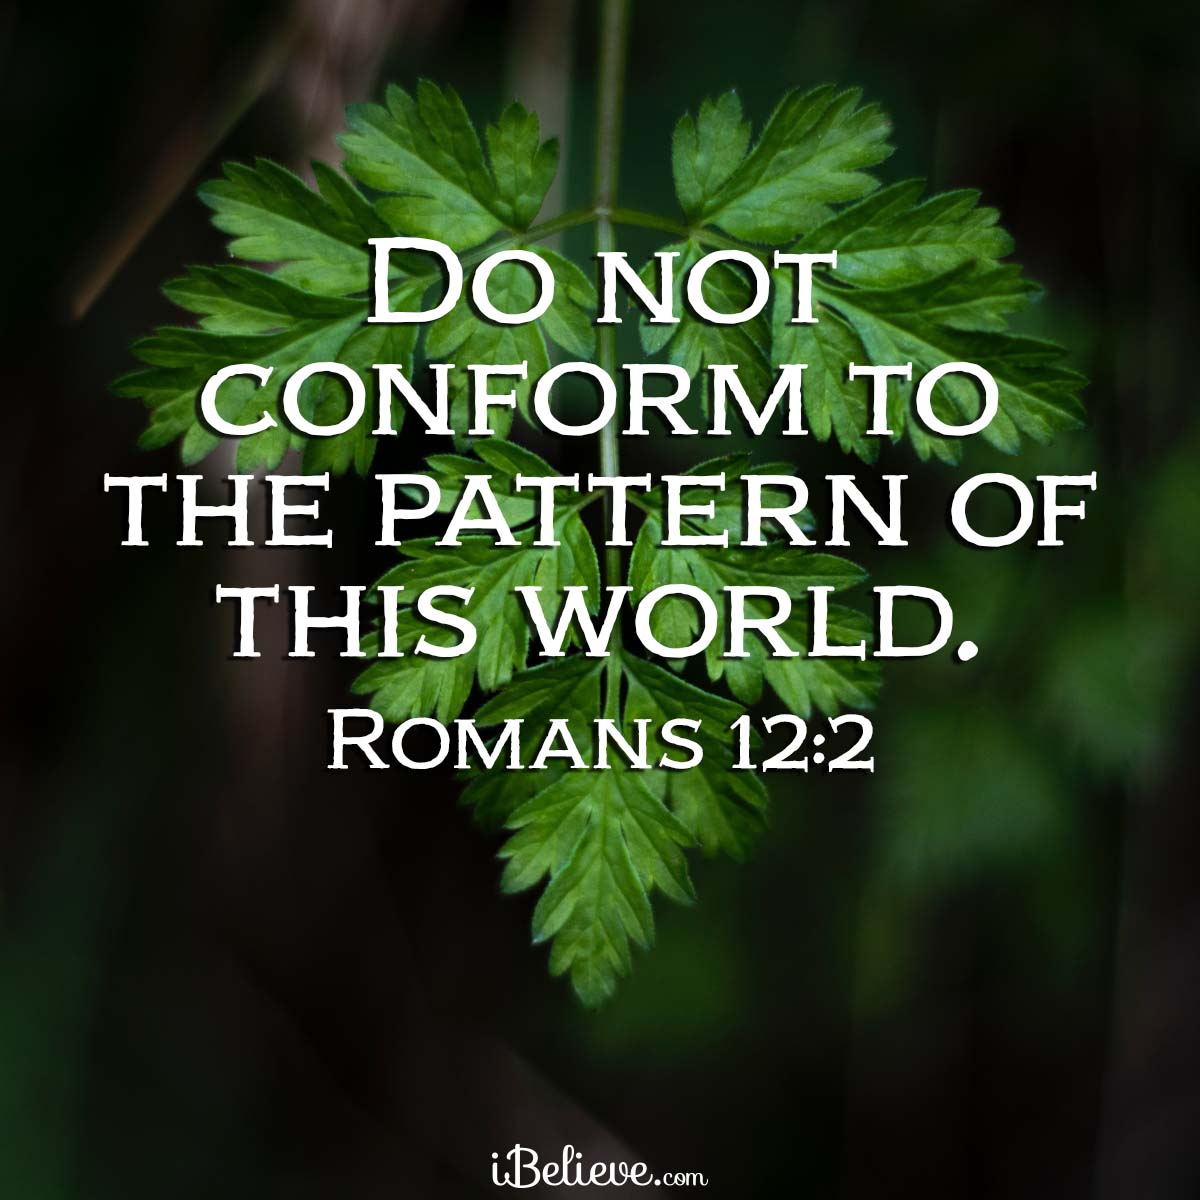 Romans 12:2, inspirational image